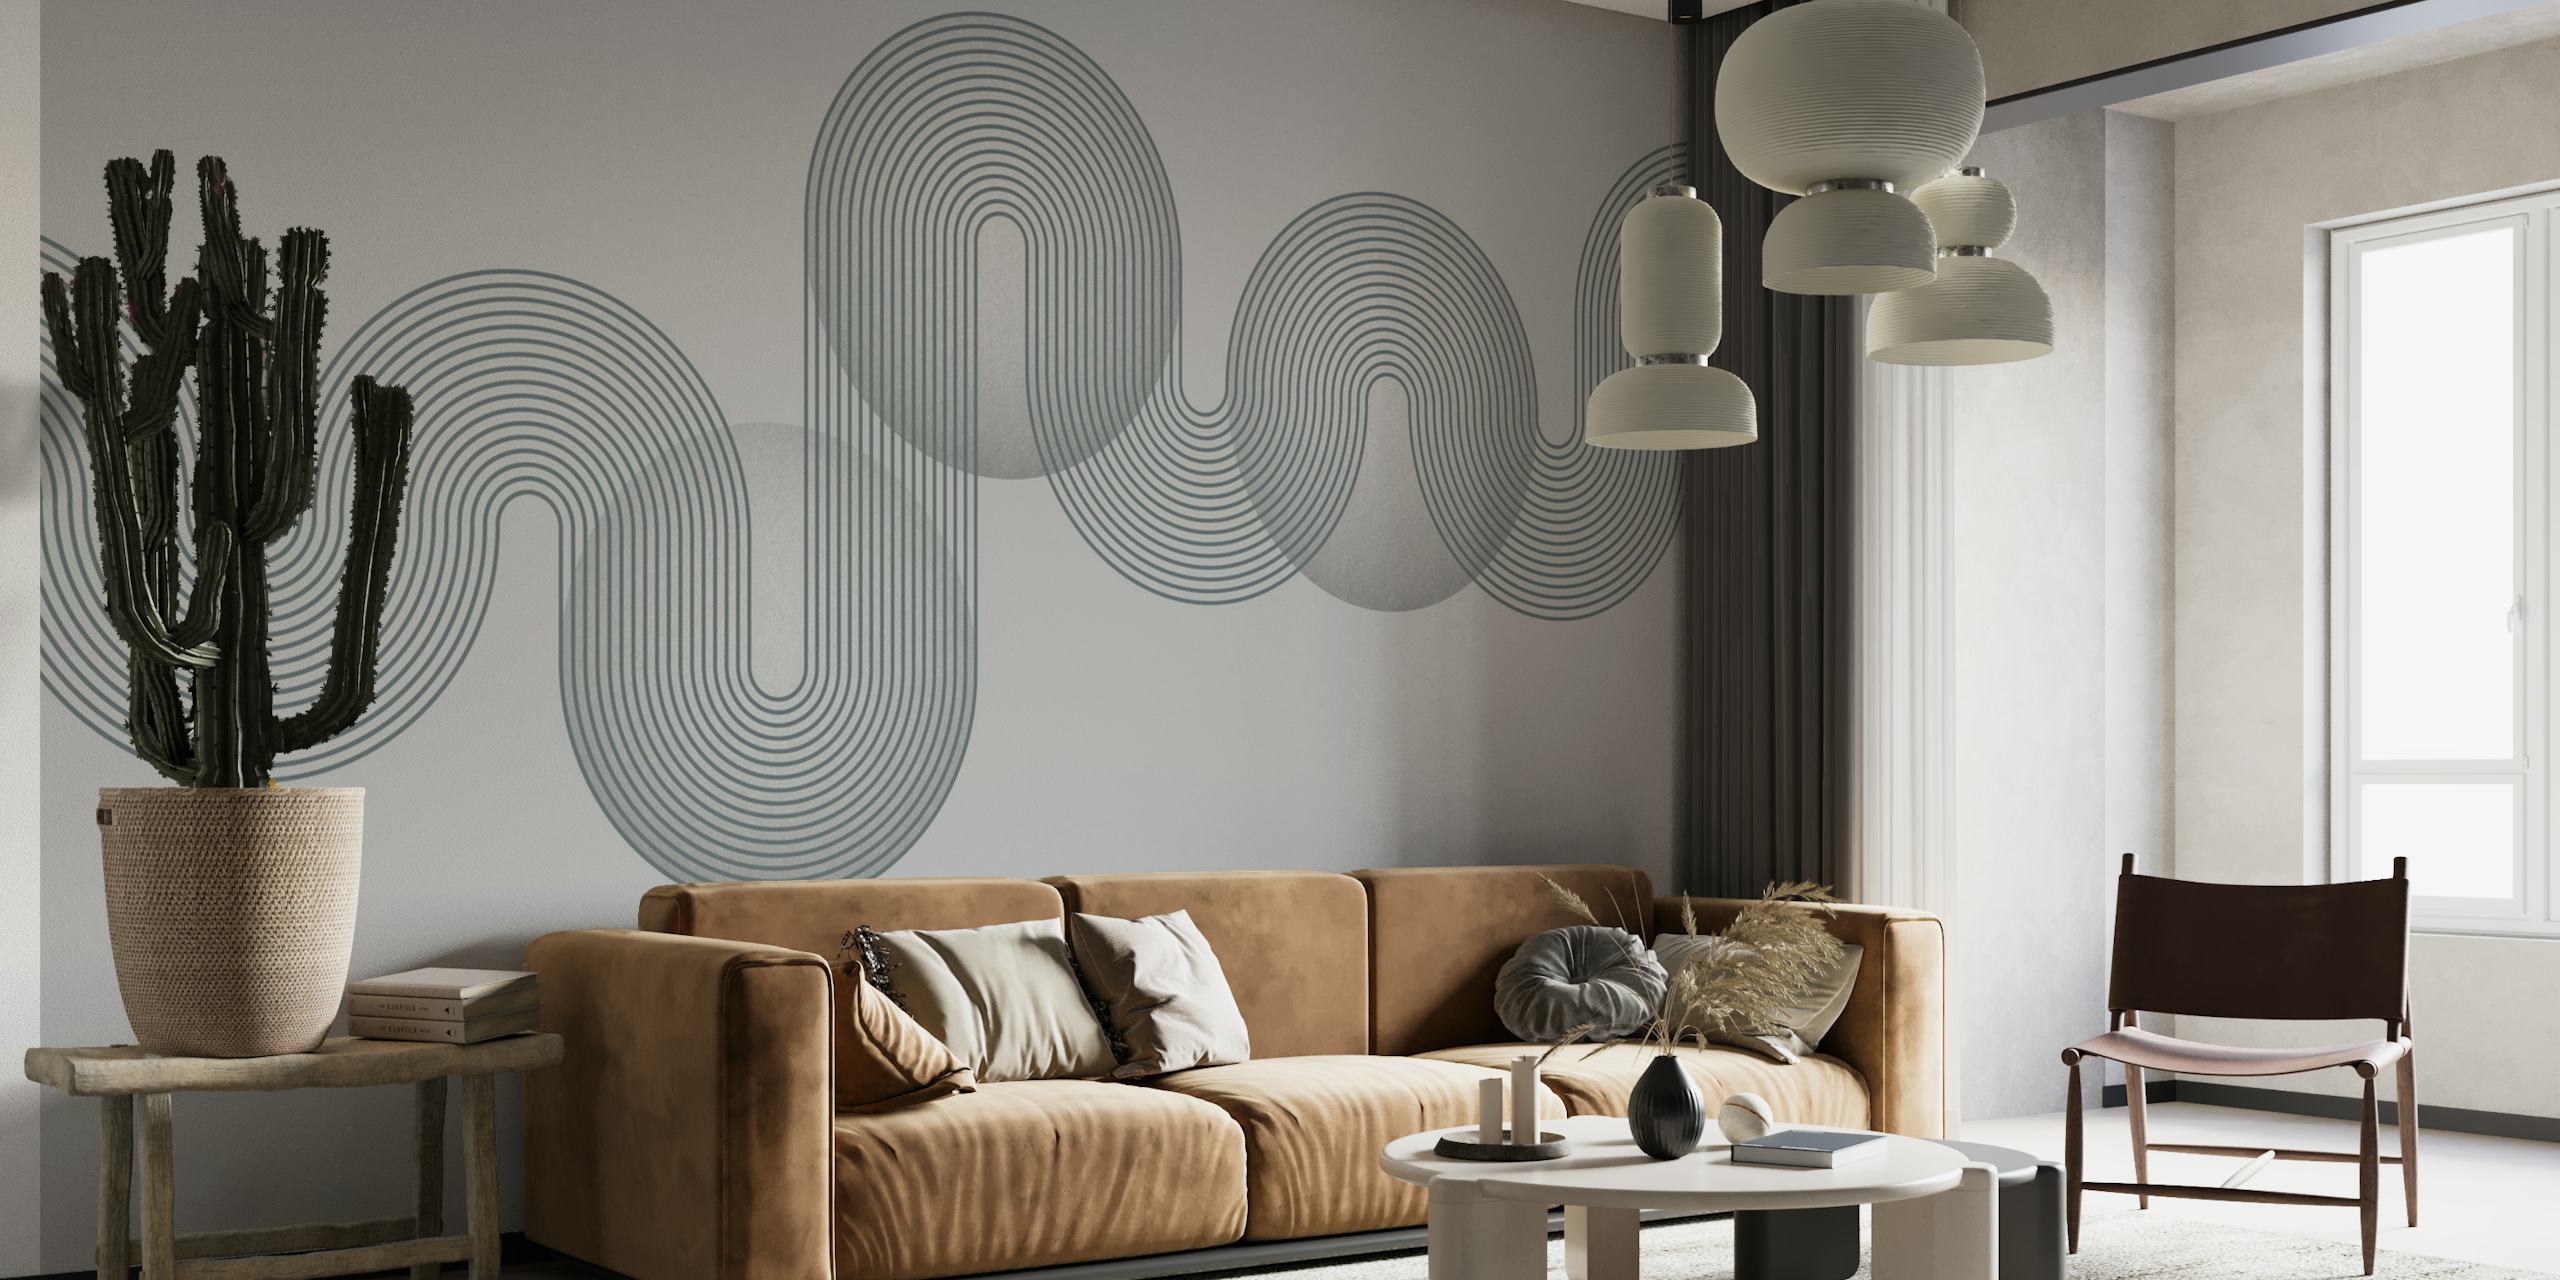 Fotomural minimalista gris Bauhaus con formas geométricas abstractas